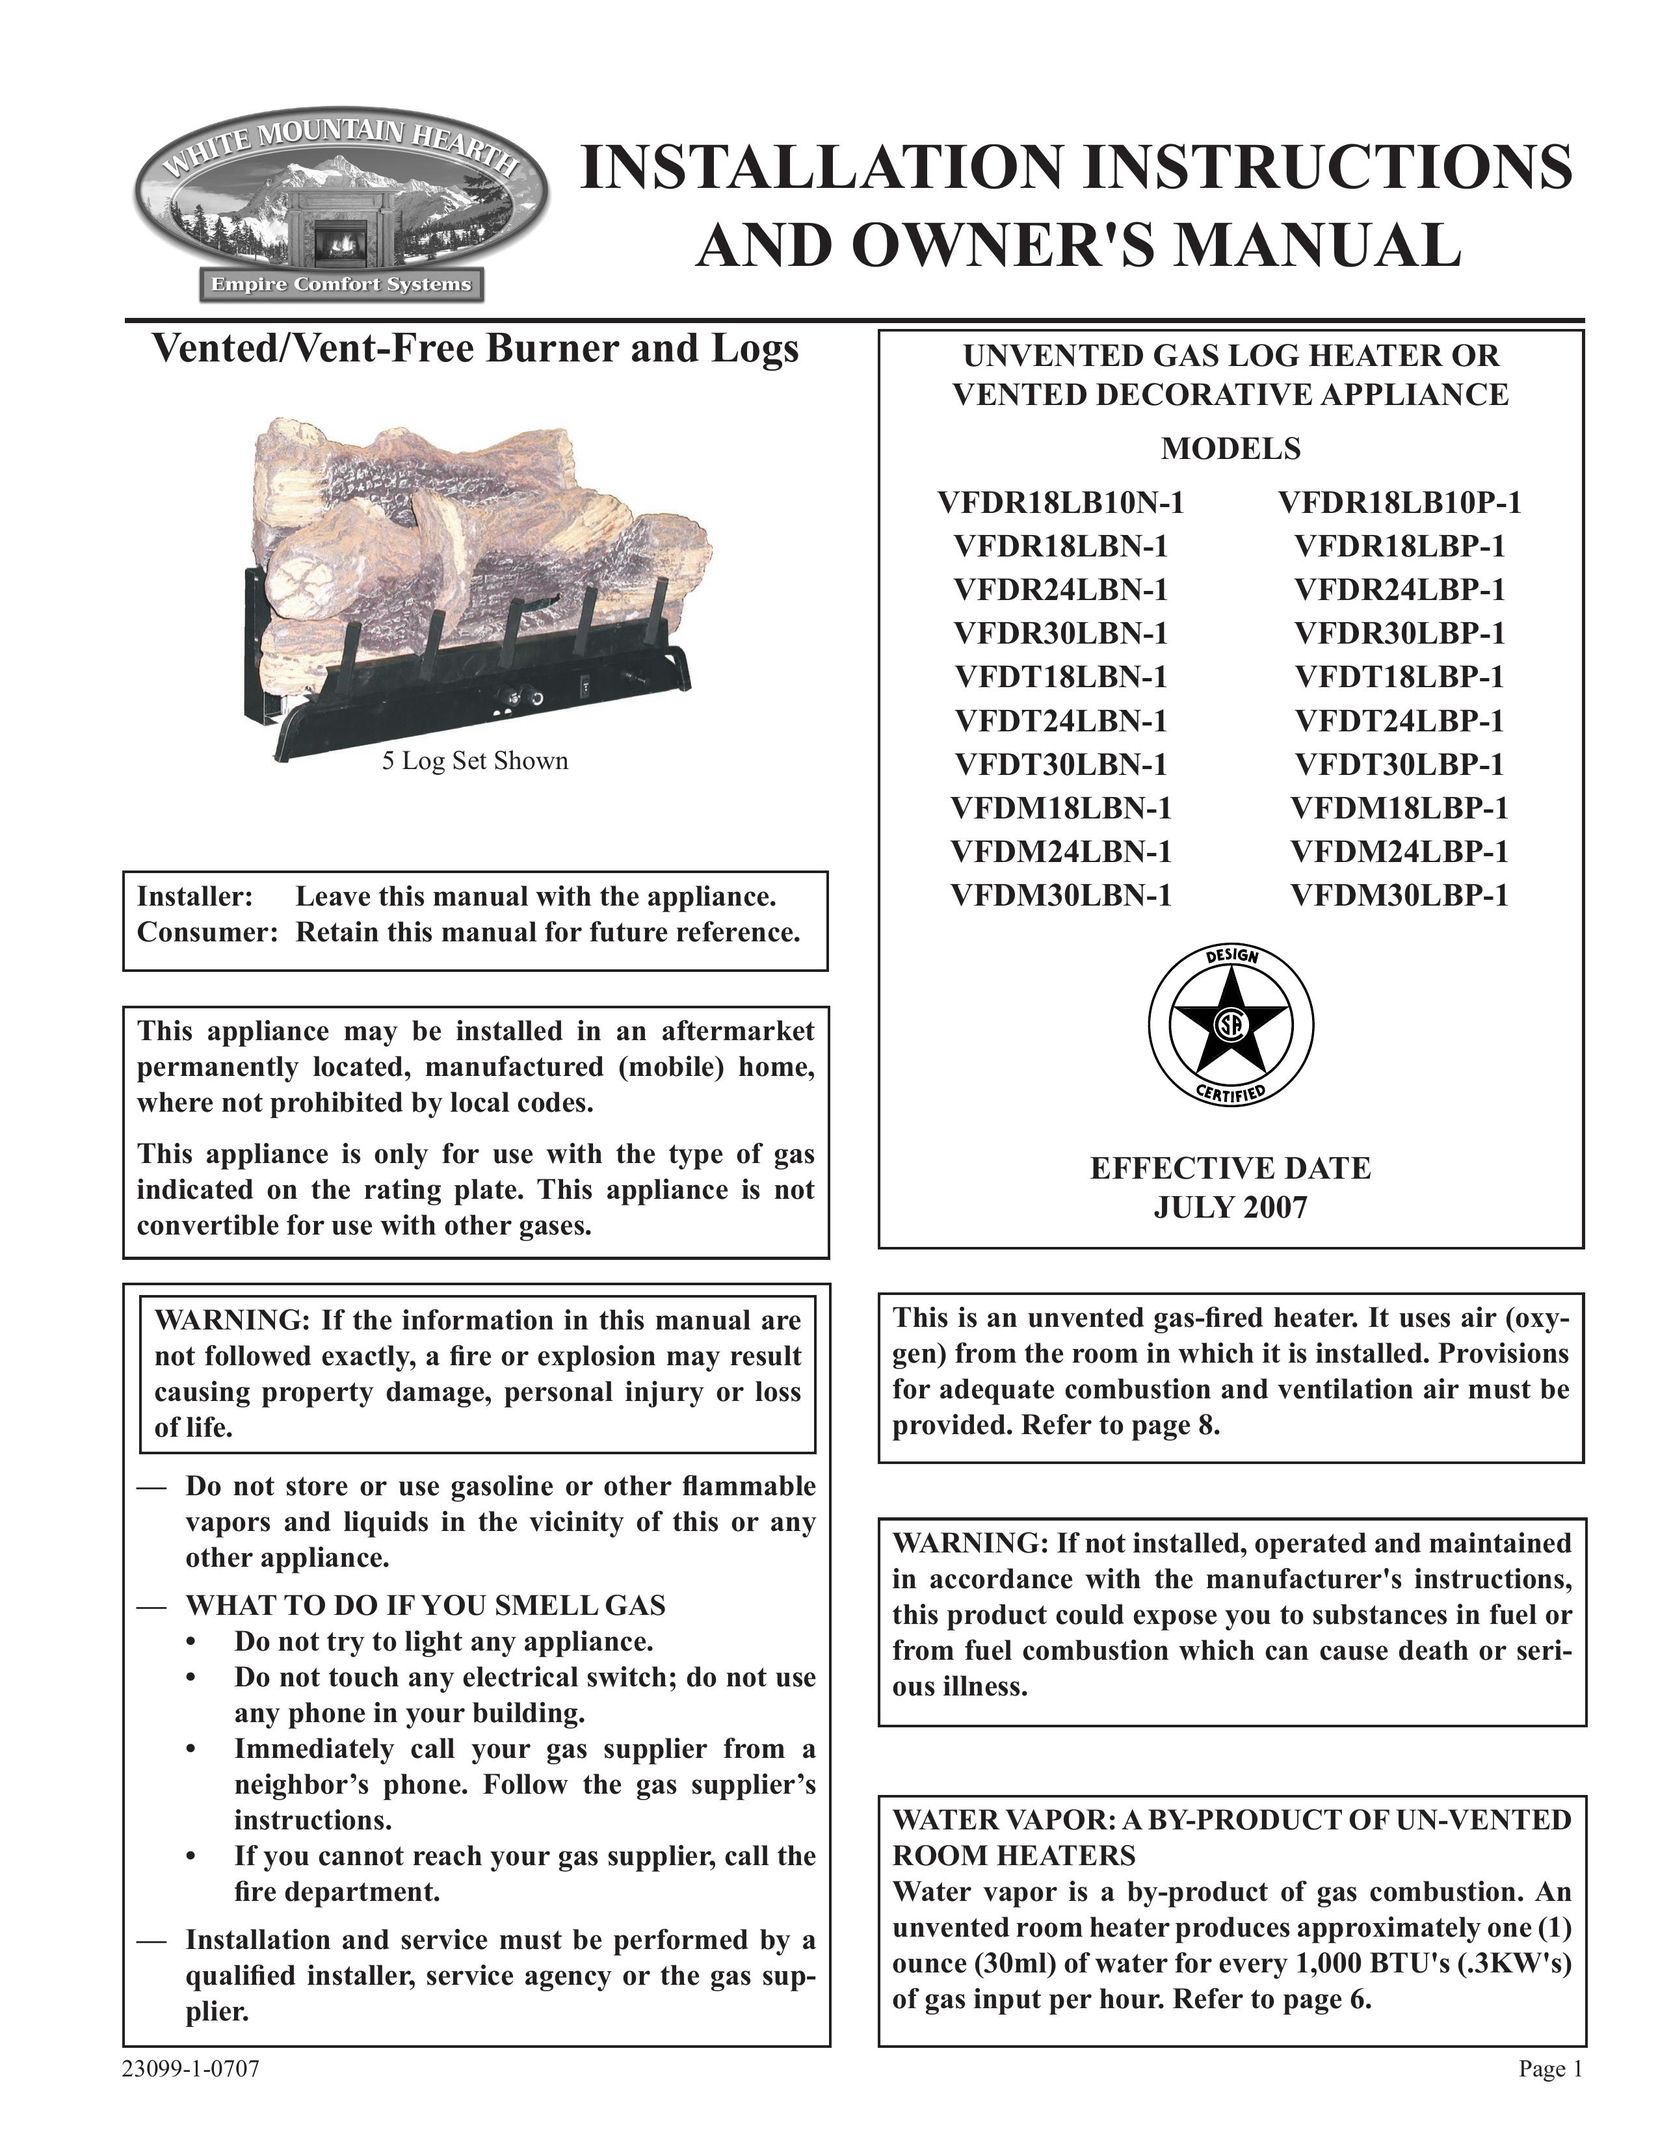 Empire Comfort Systems VFDM24LBN-1 Gas Heater User Manual